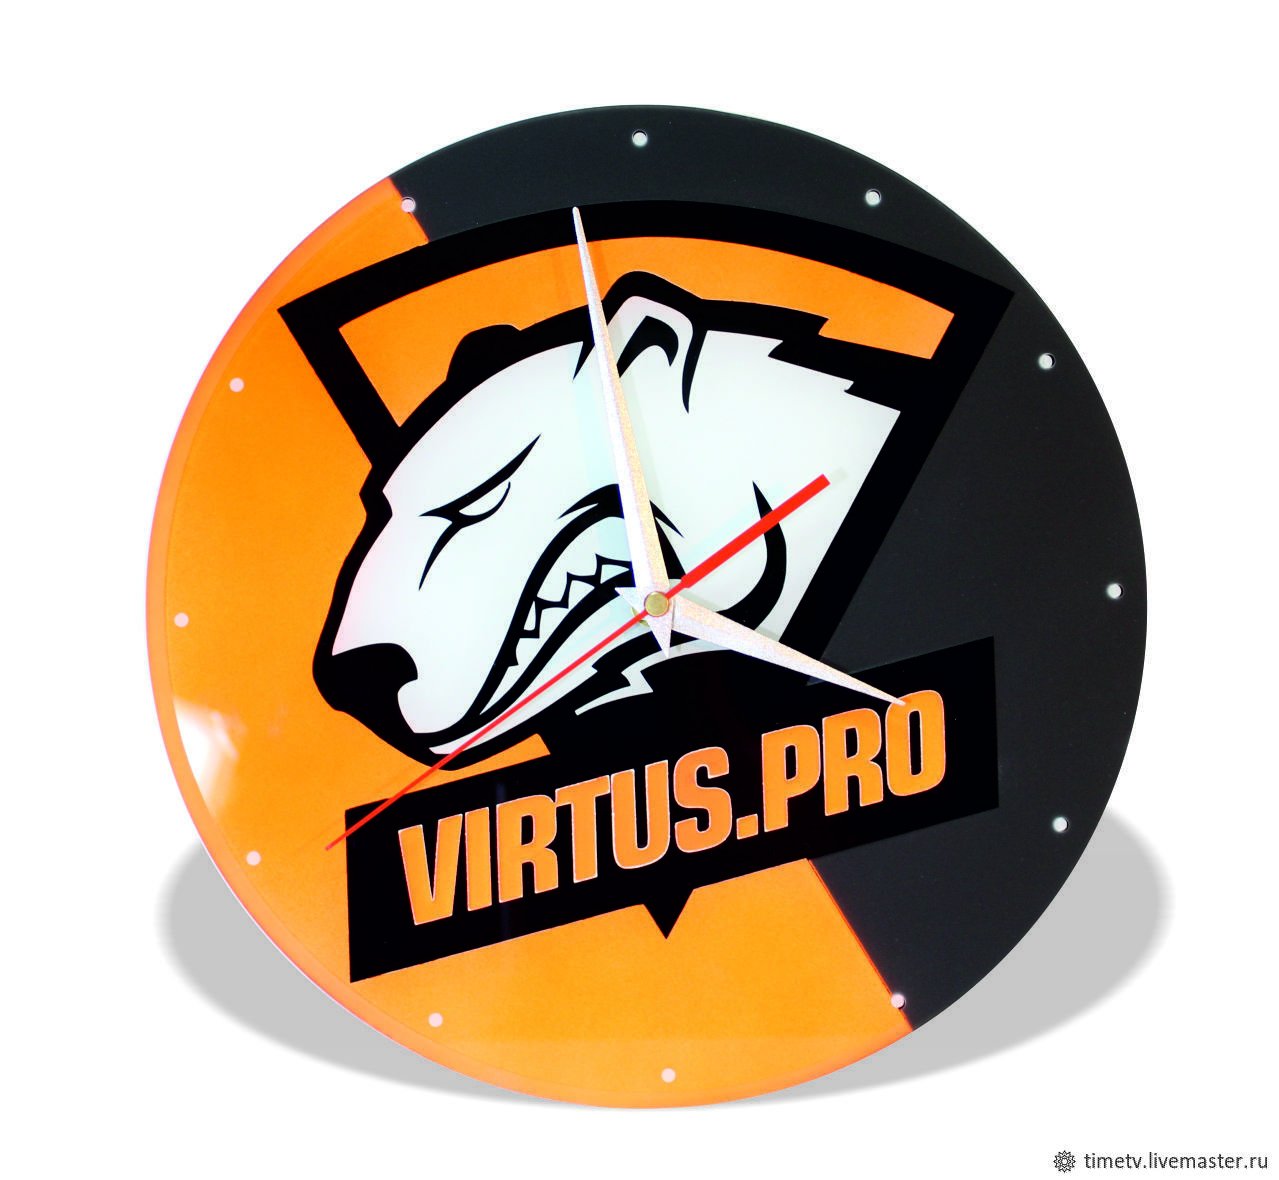 Virtus pro cs 2. Virtus Pro Dota 2 logo. VP Virtus Pro. Virtus Pro CS go logo. Знак Виртус про.